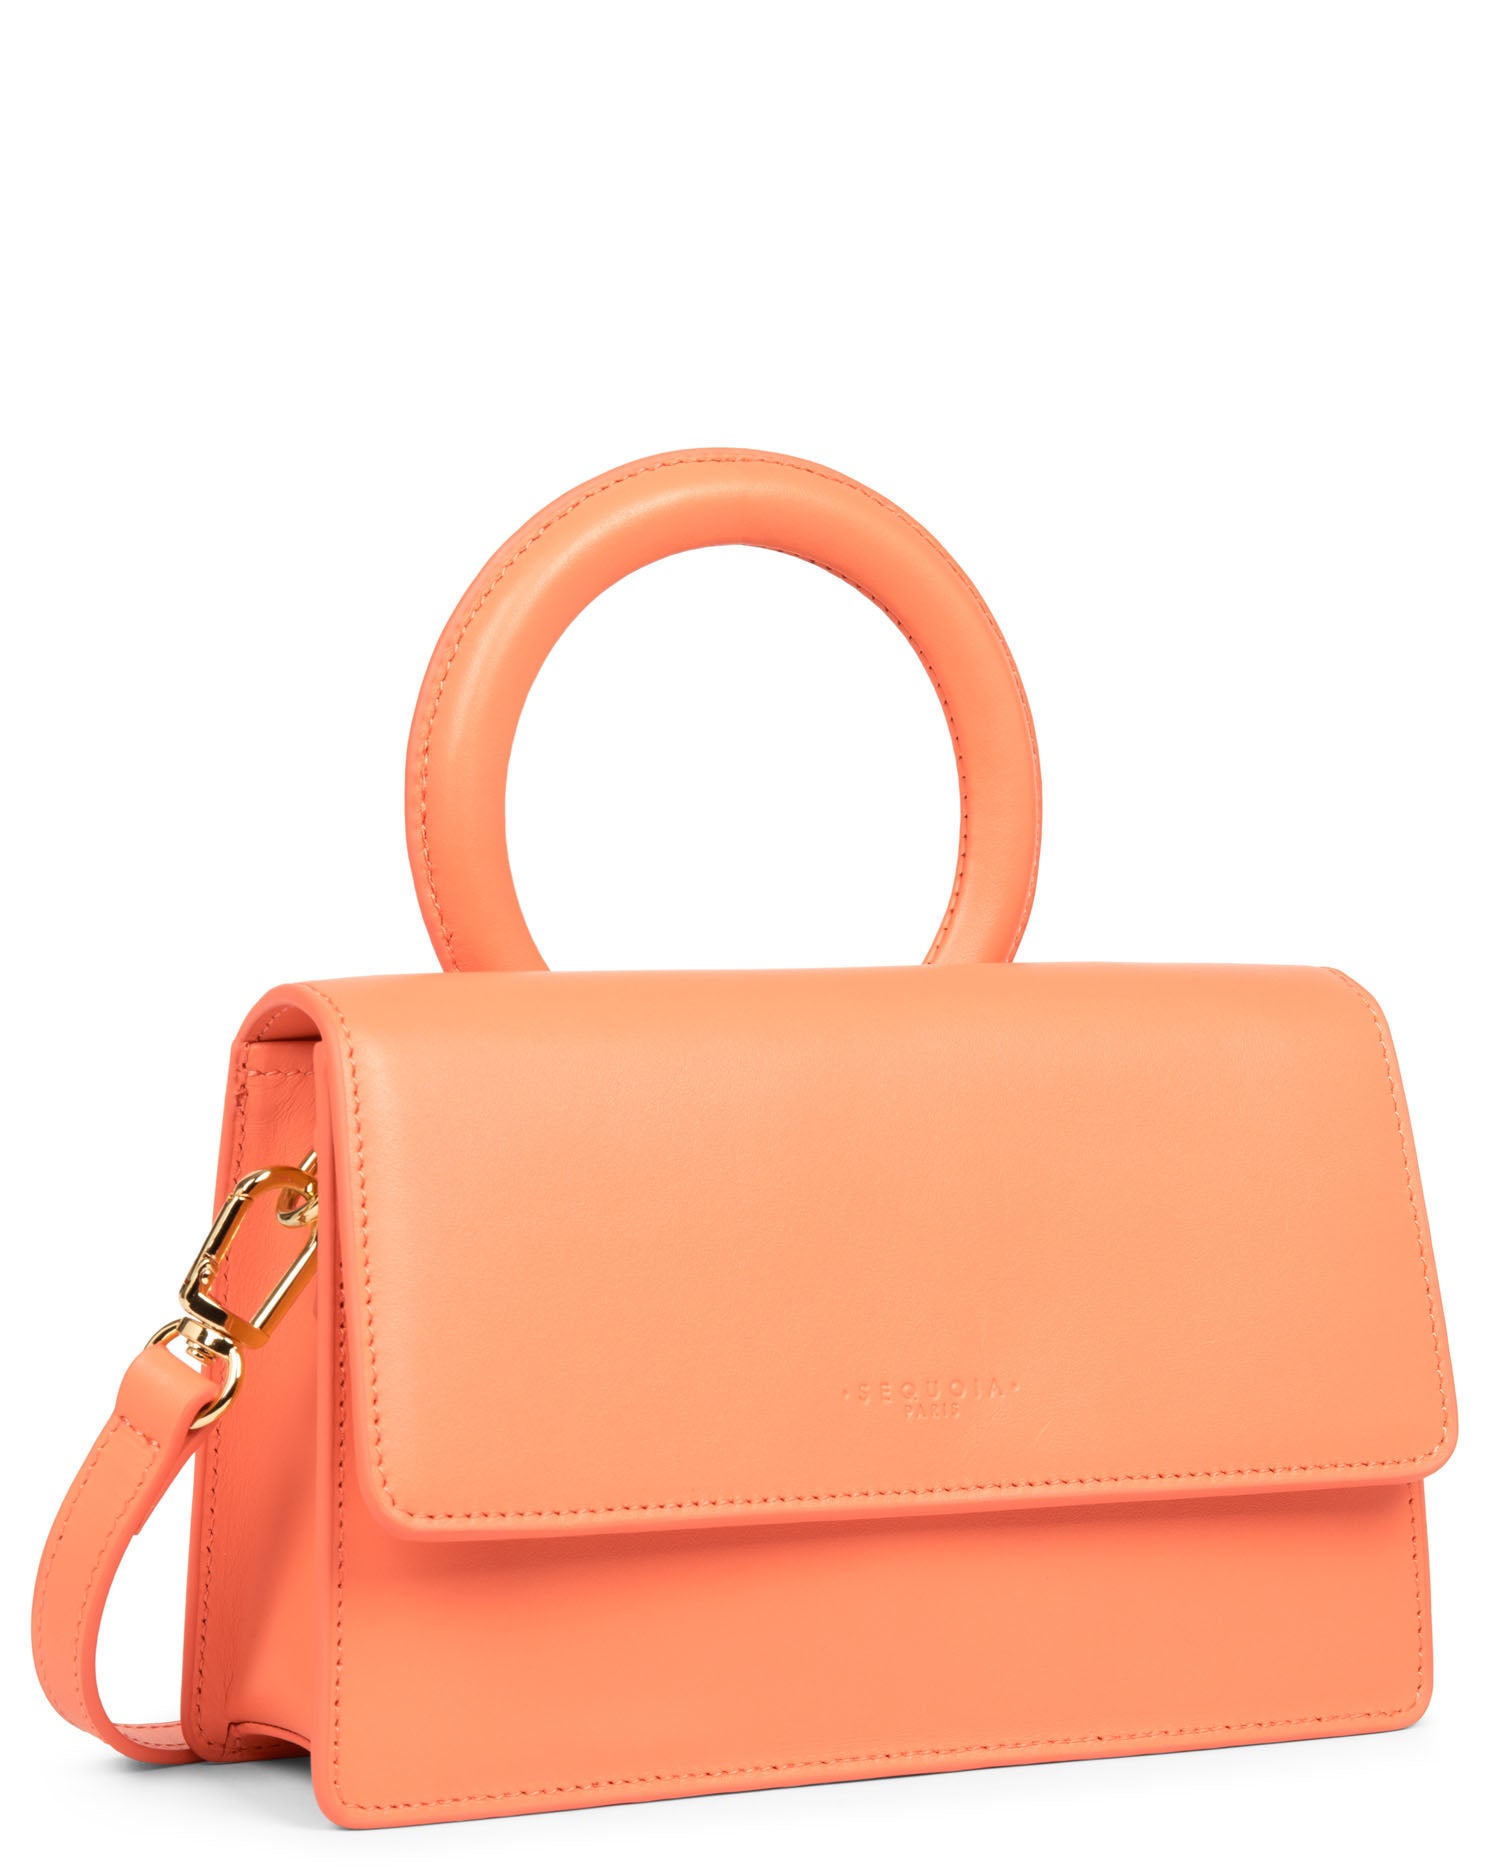 Buy Exotic Women Blue, Orange Handbag BLUE-ORANGE Online @ Best